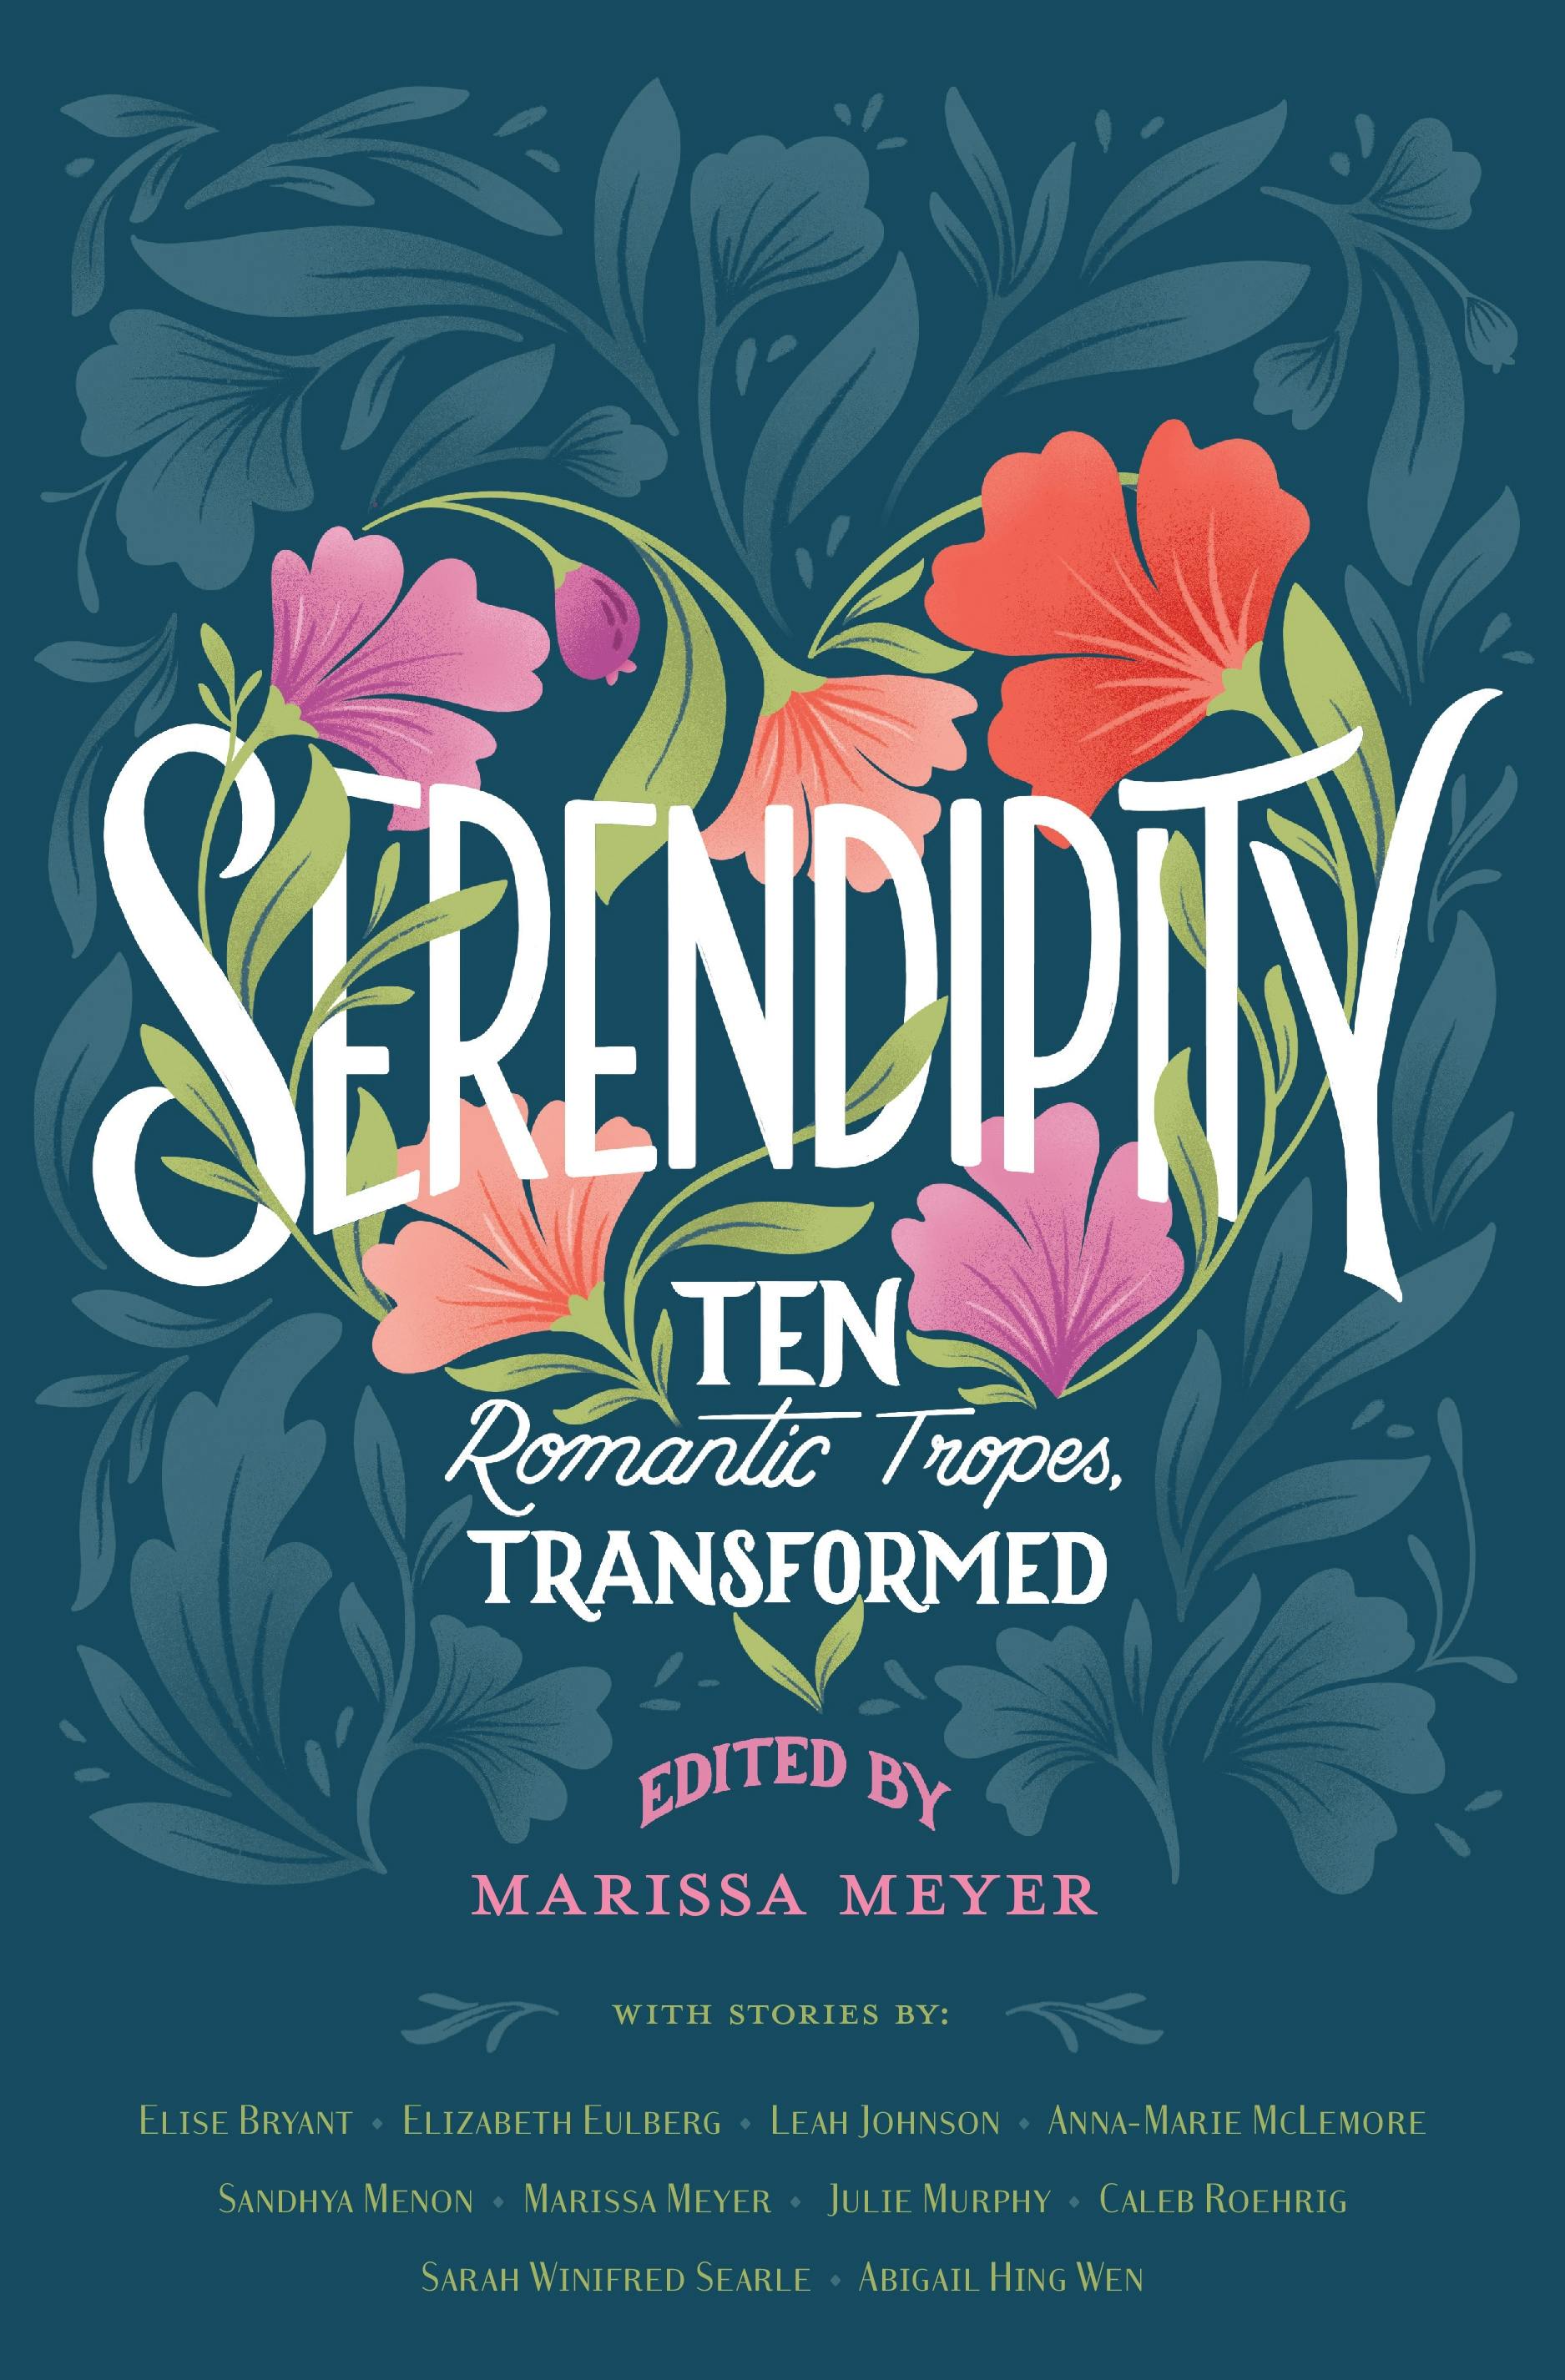 karma serendipity book three